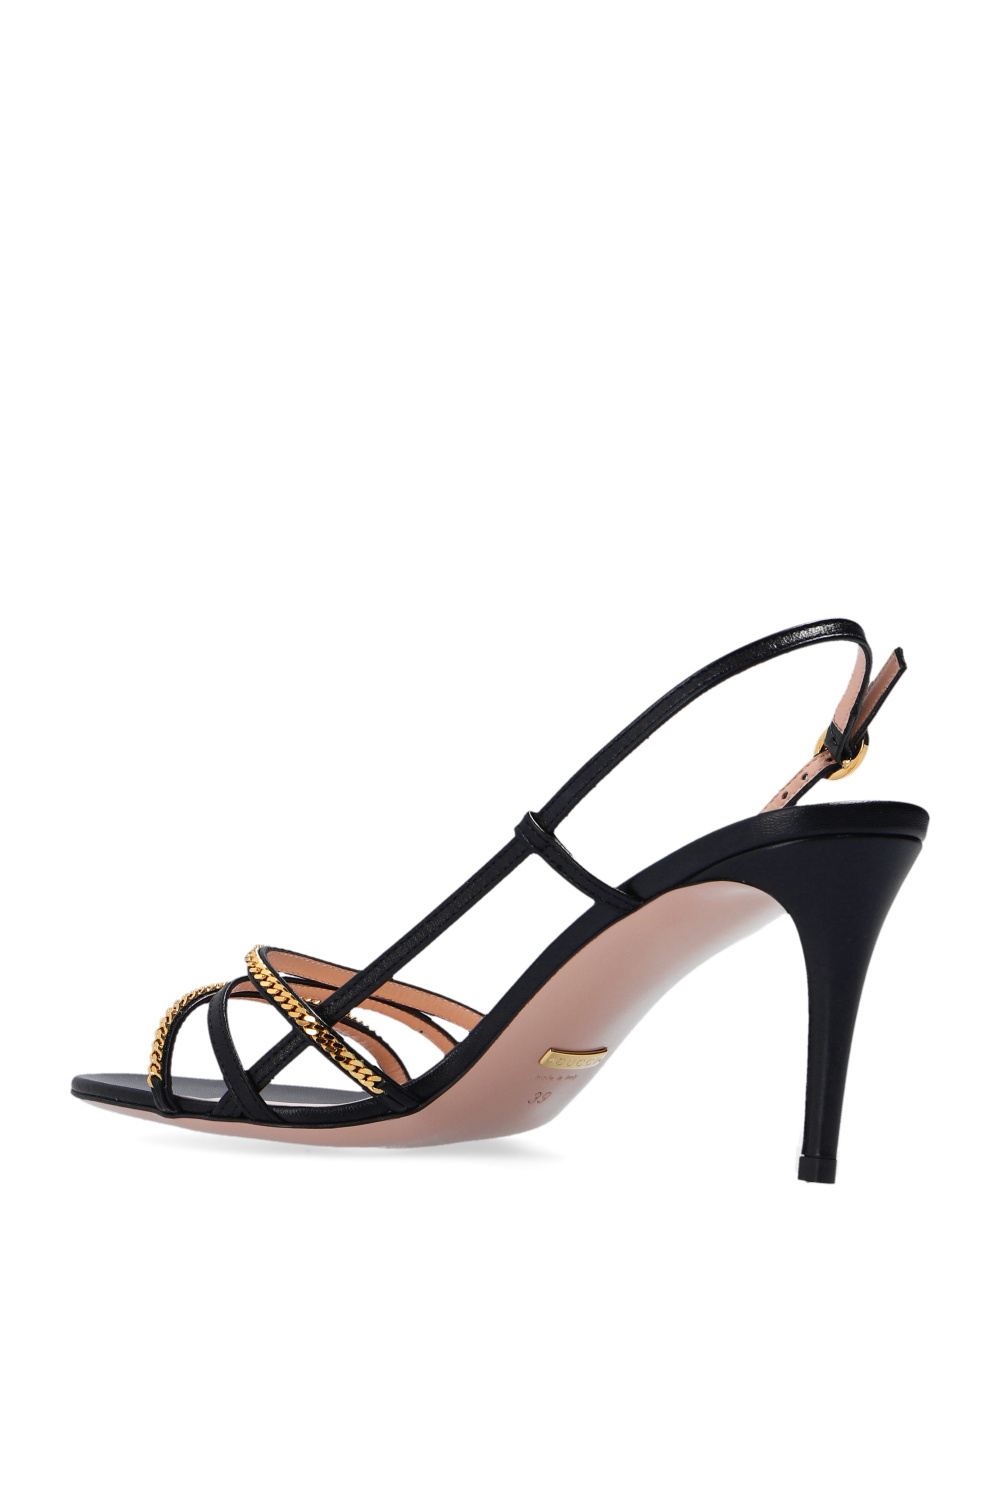 Gucci ‘Malaga’ heeled sandals